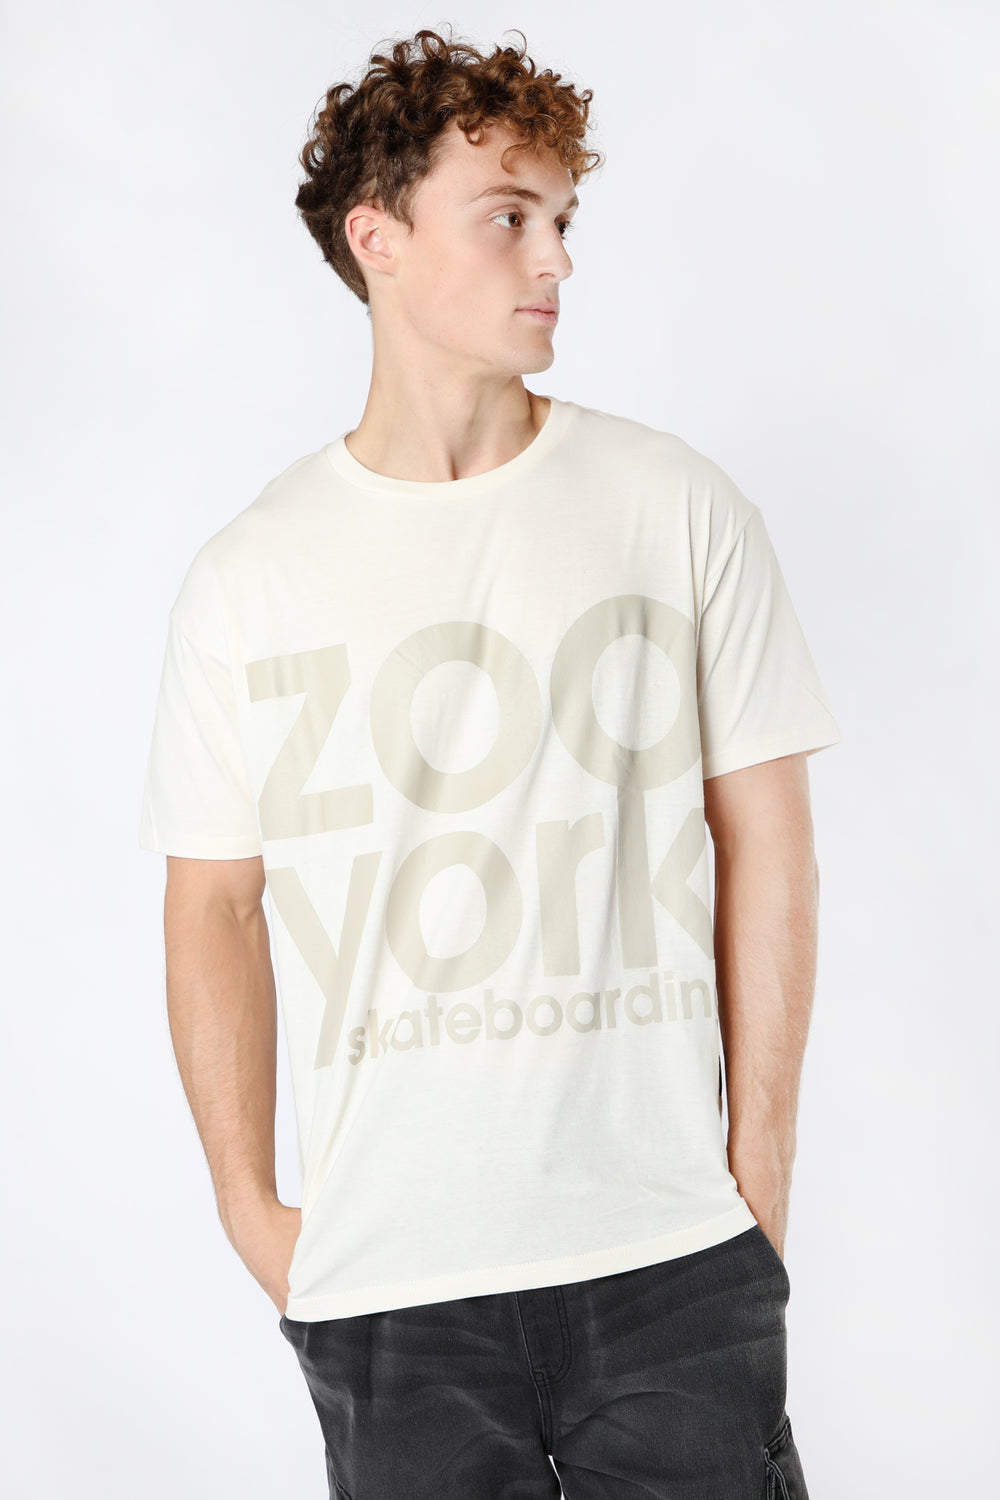 T-Shirt Unisexe Imprimé Grand Logo Zoo York Skateboarding Blanc casse